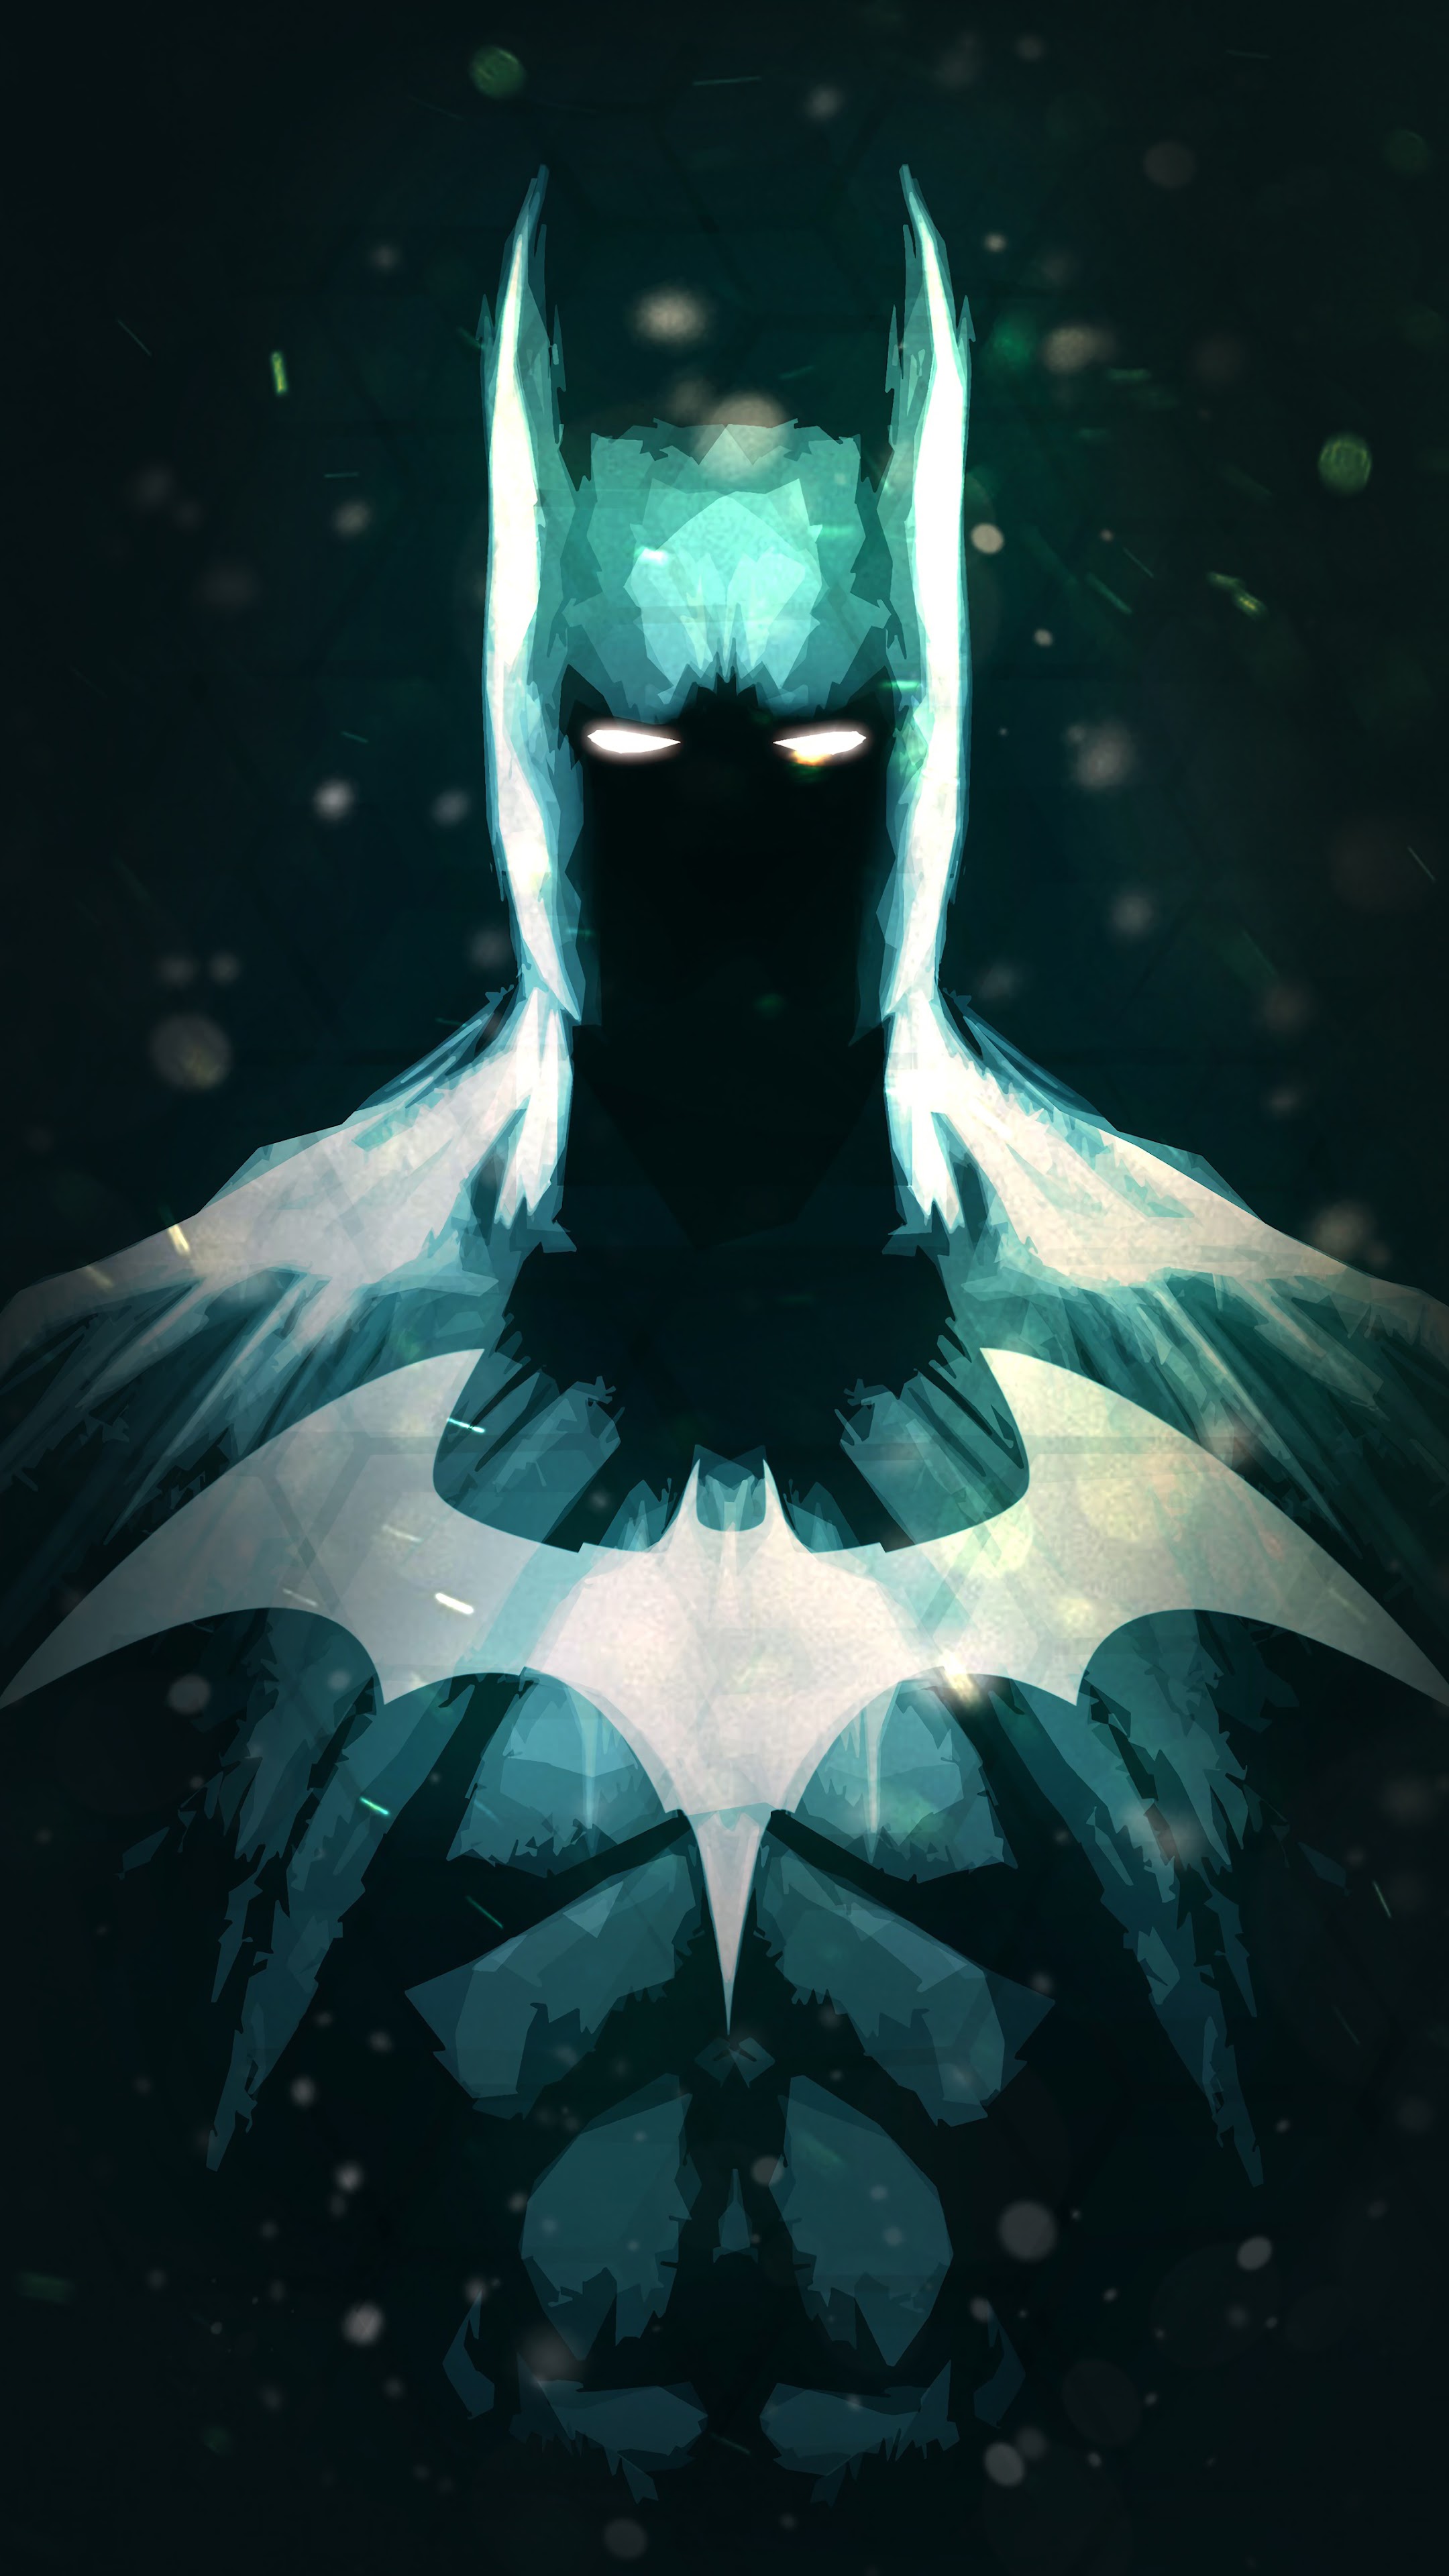 Batman S7 Edge Wallpaper by Paradoxasgard on DeviantArt